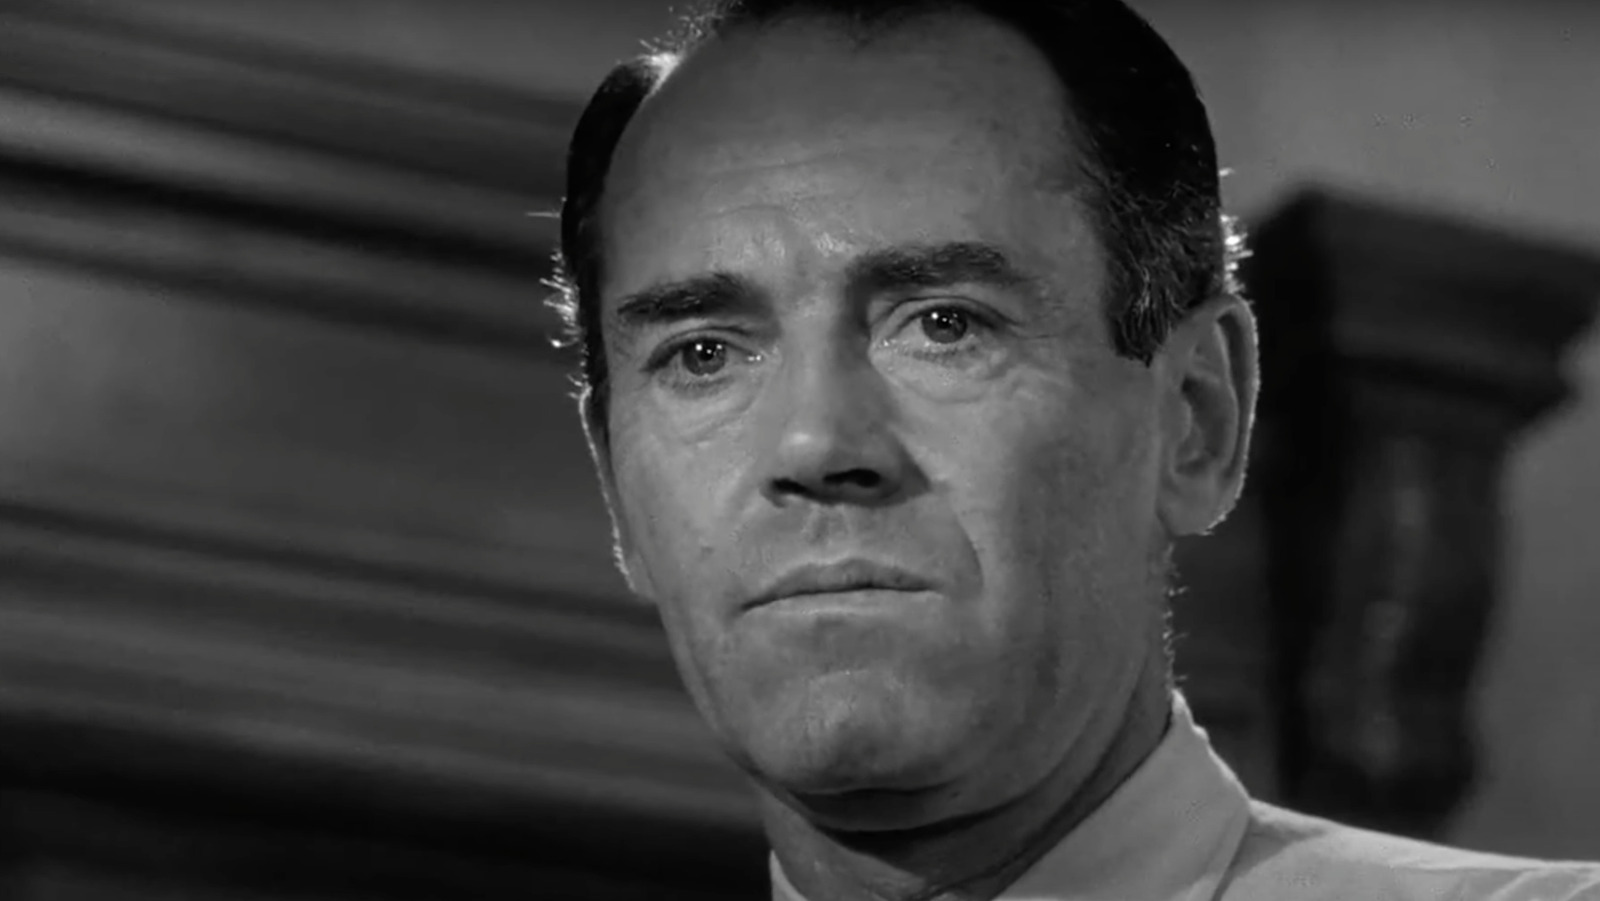 12 angry men (1957 film)